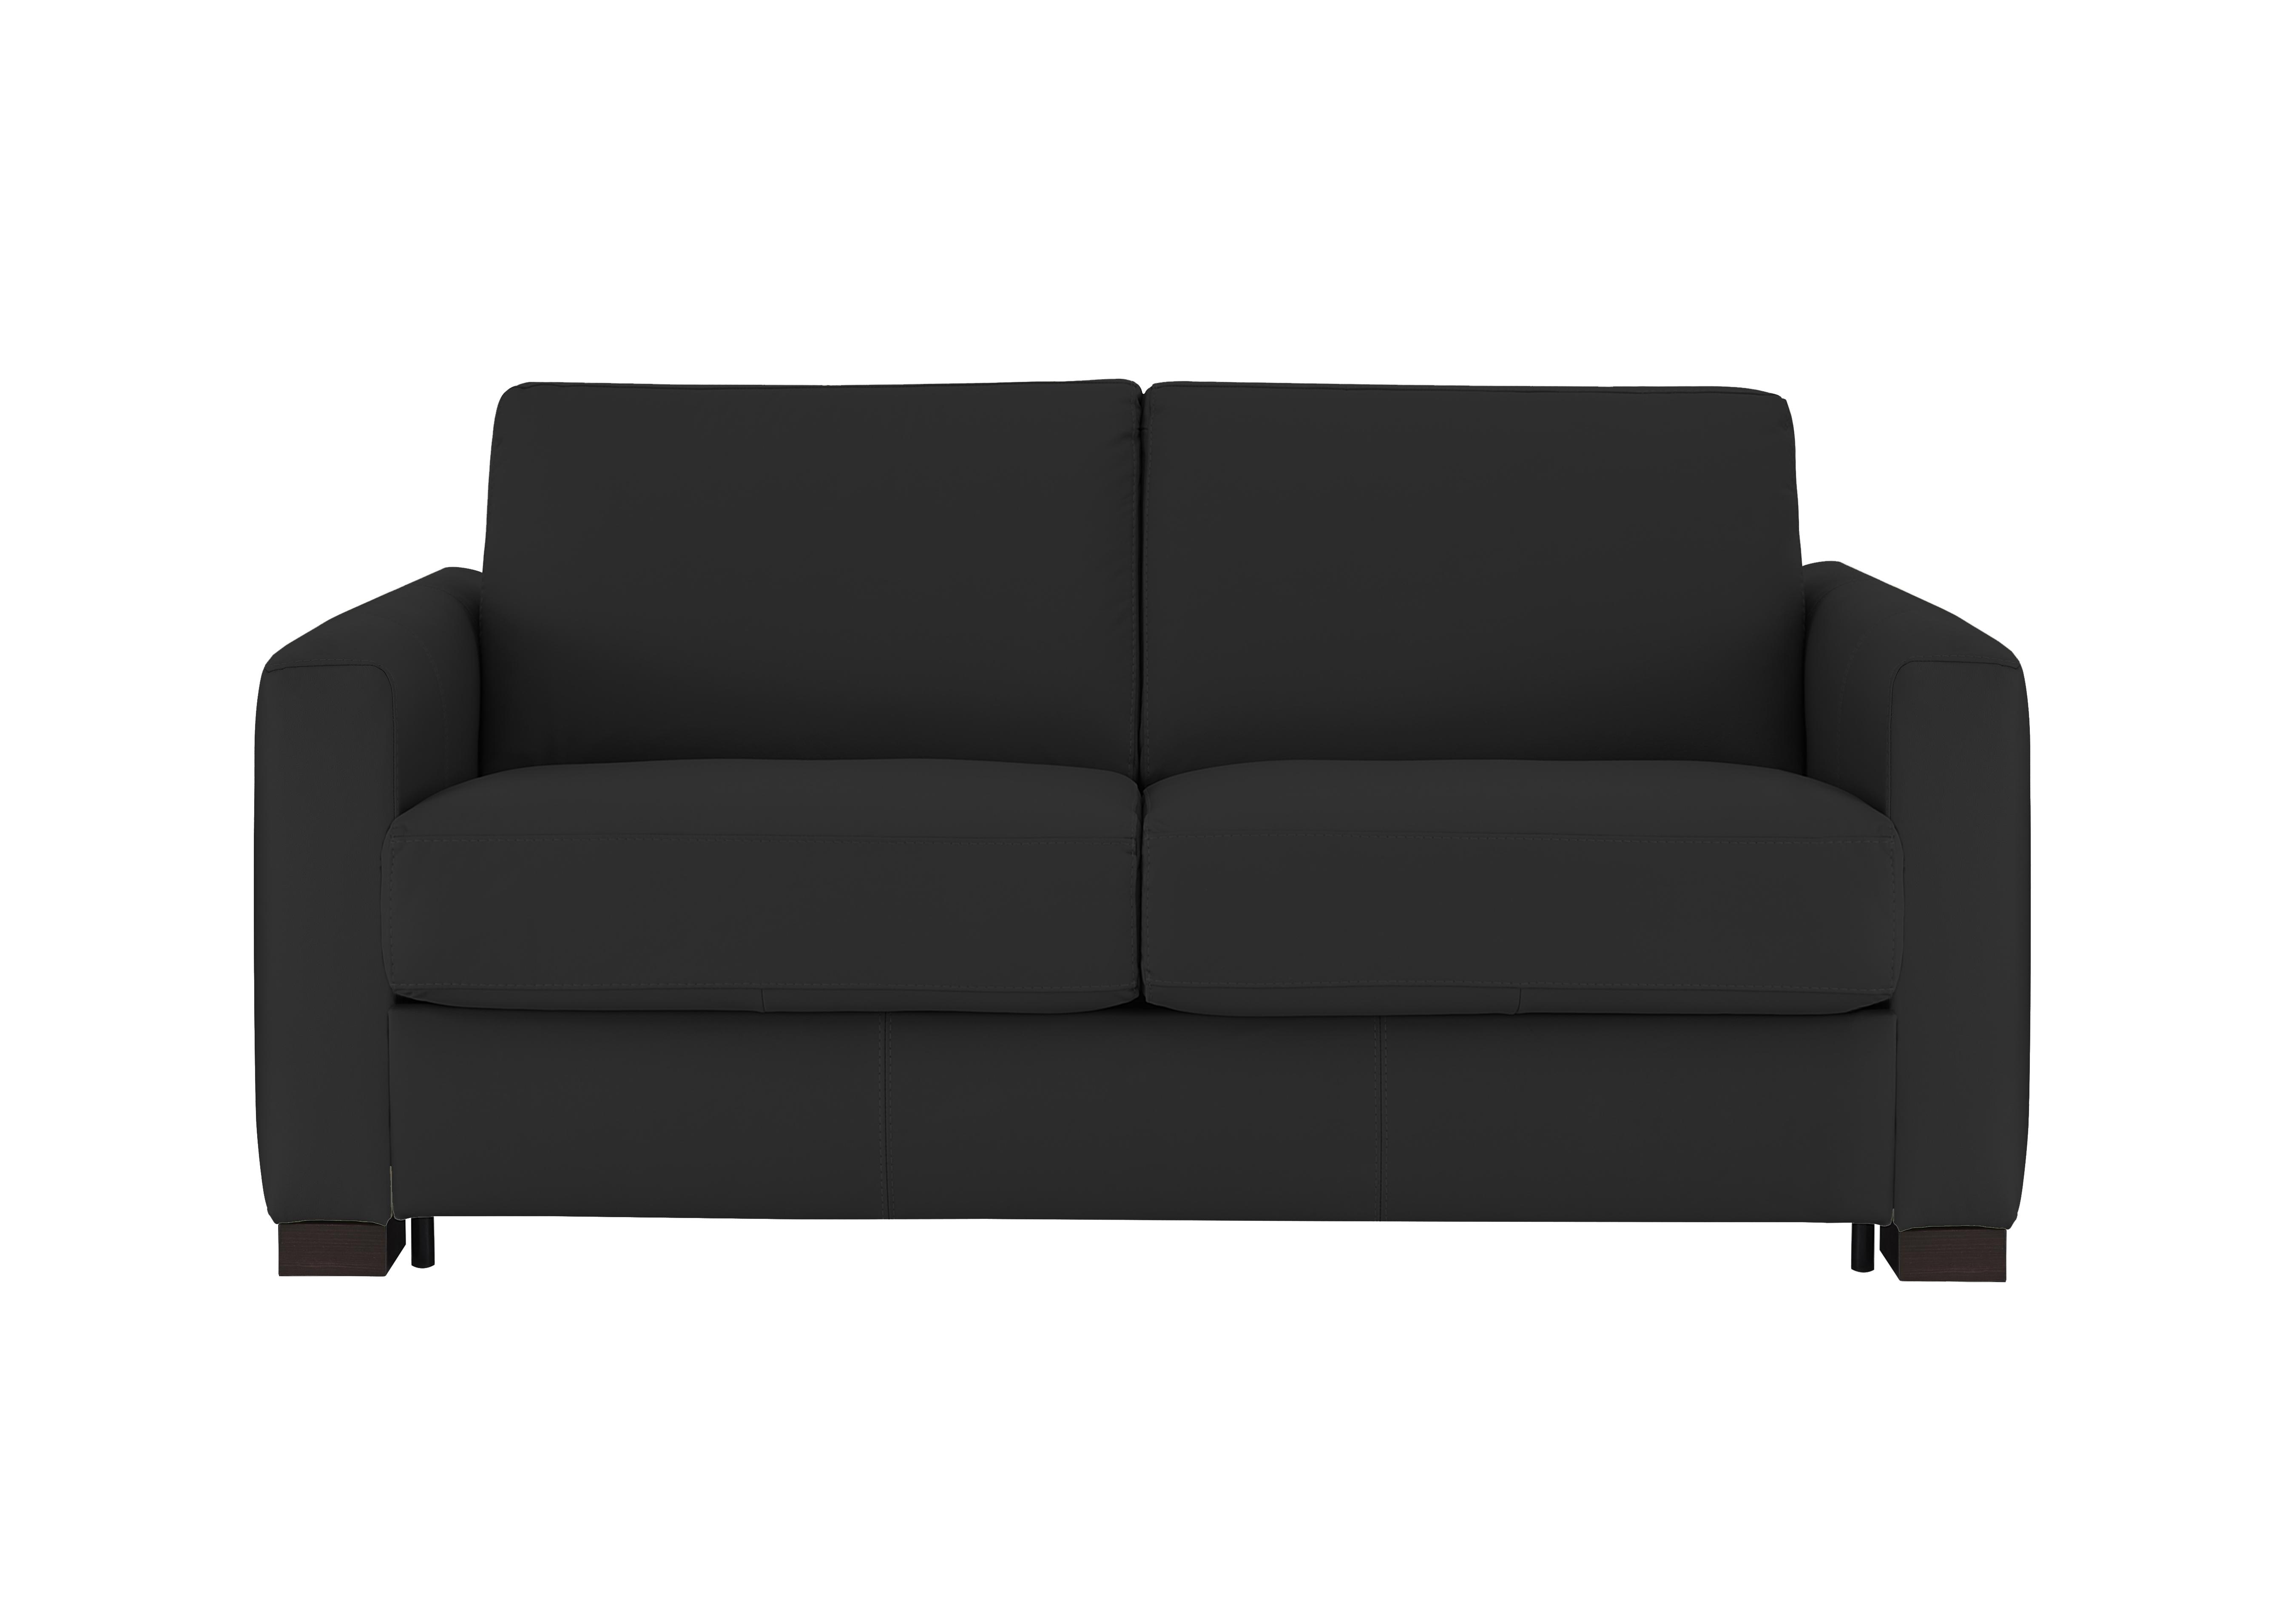 Alcova 2 Seater Leather Sofa Bed with Box Arms in Torello Nero 71 on Furniture Village